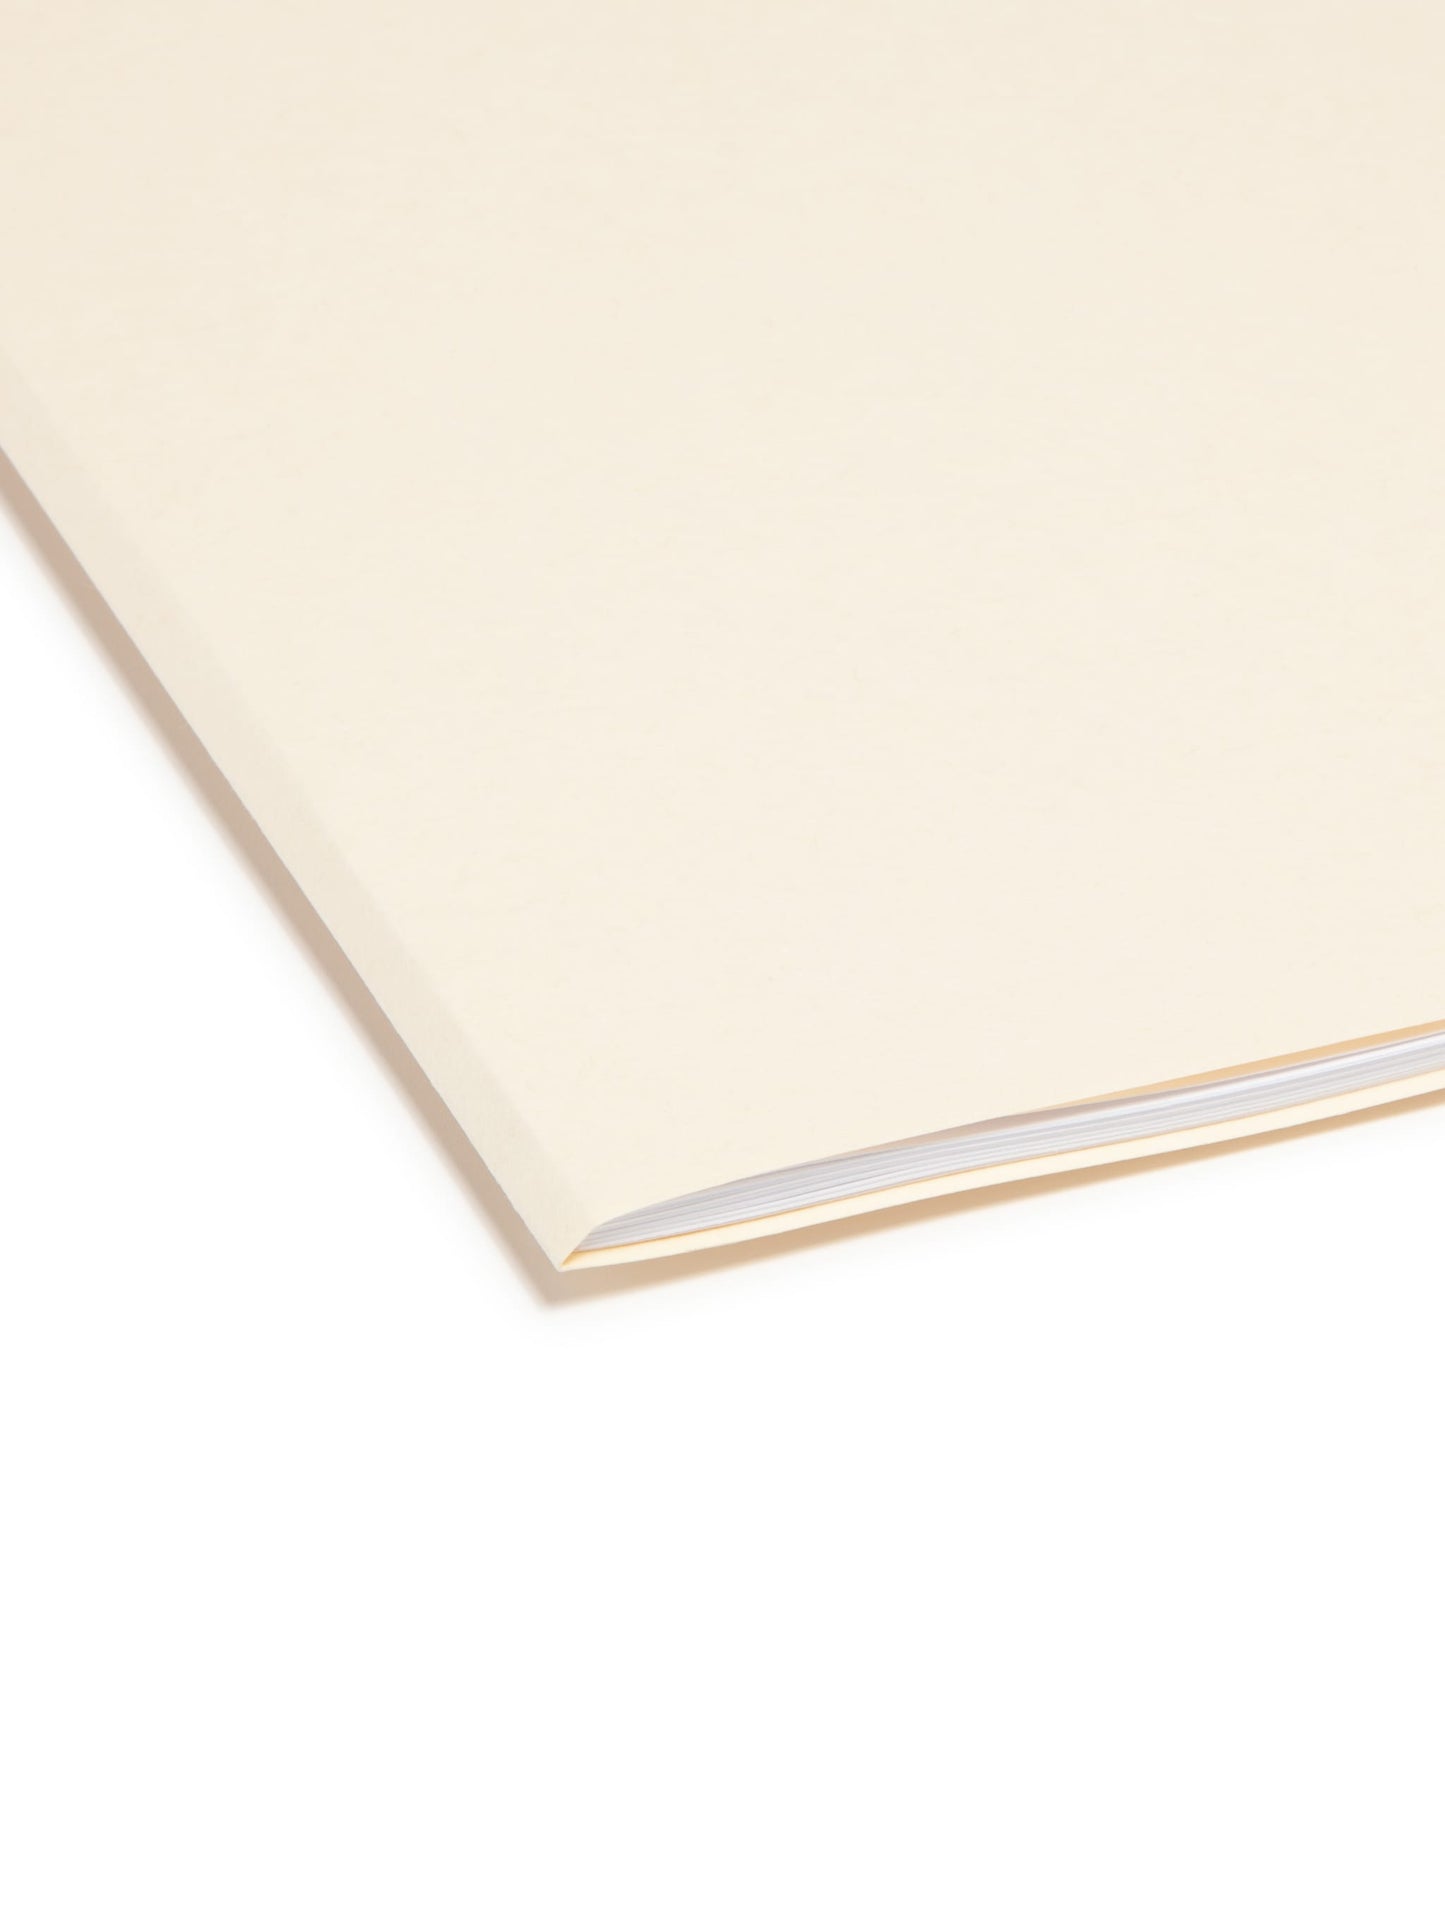 Reinforced Tab File Folders, 1/2-Cut Tab, Manila Color, Letter Size, Set of 100, 086486103268